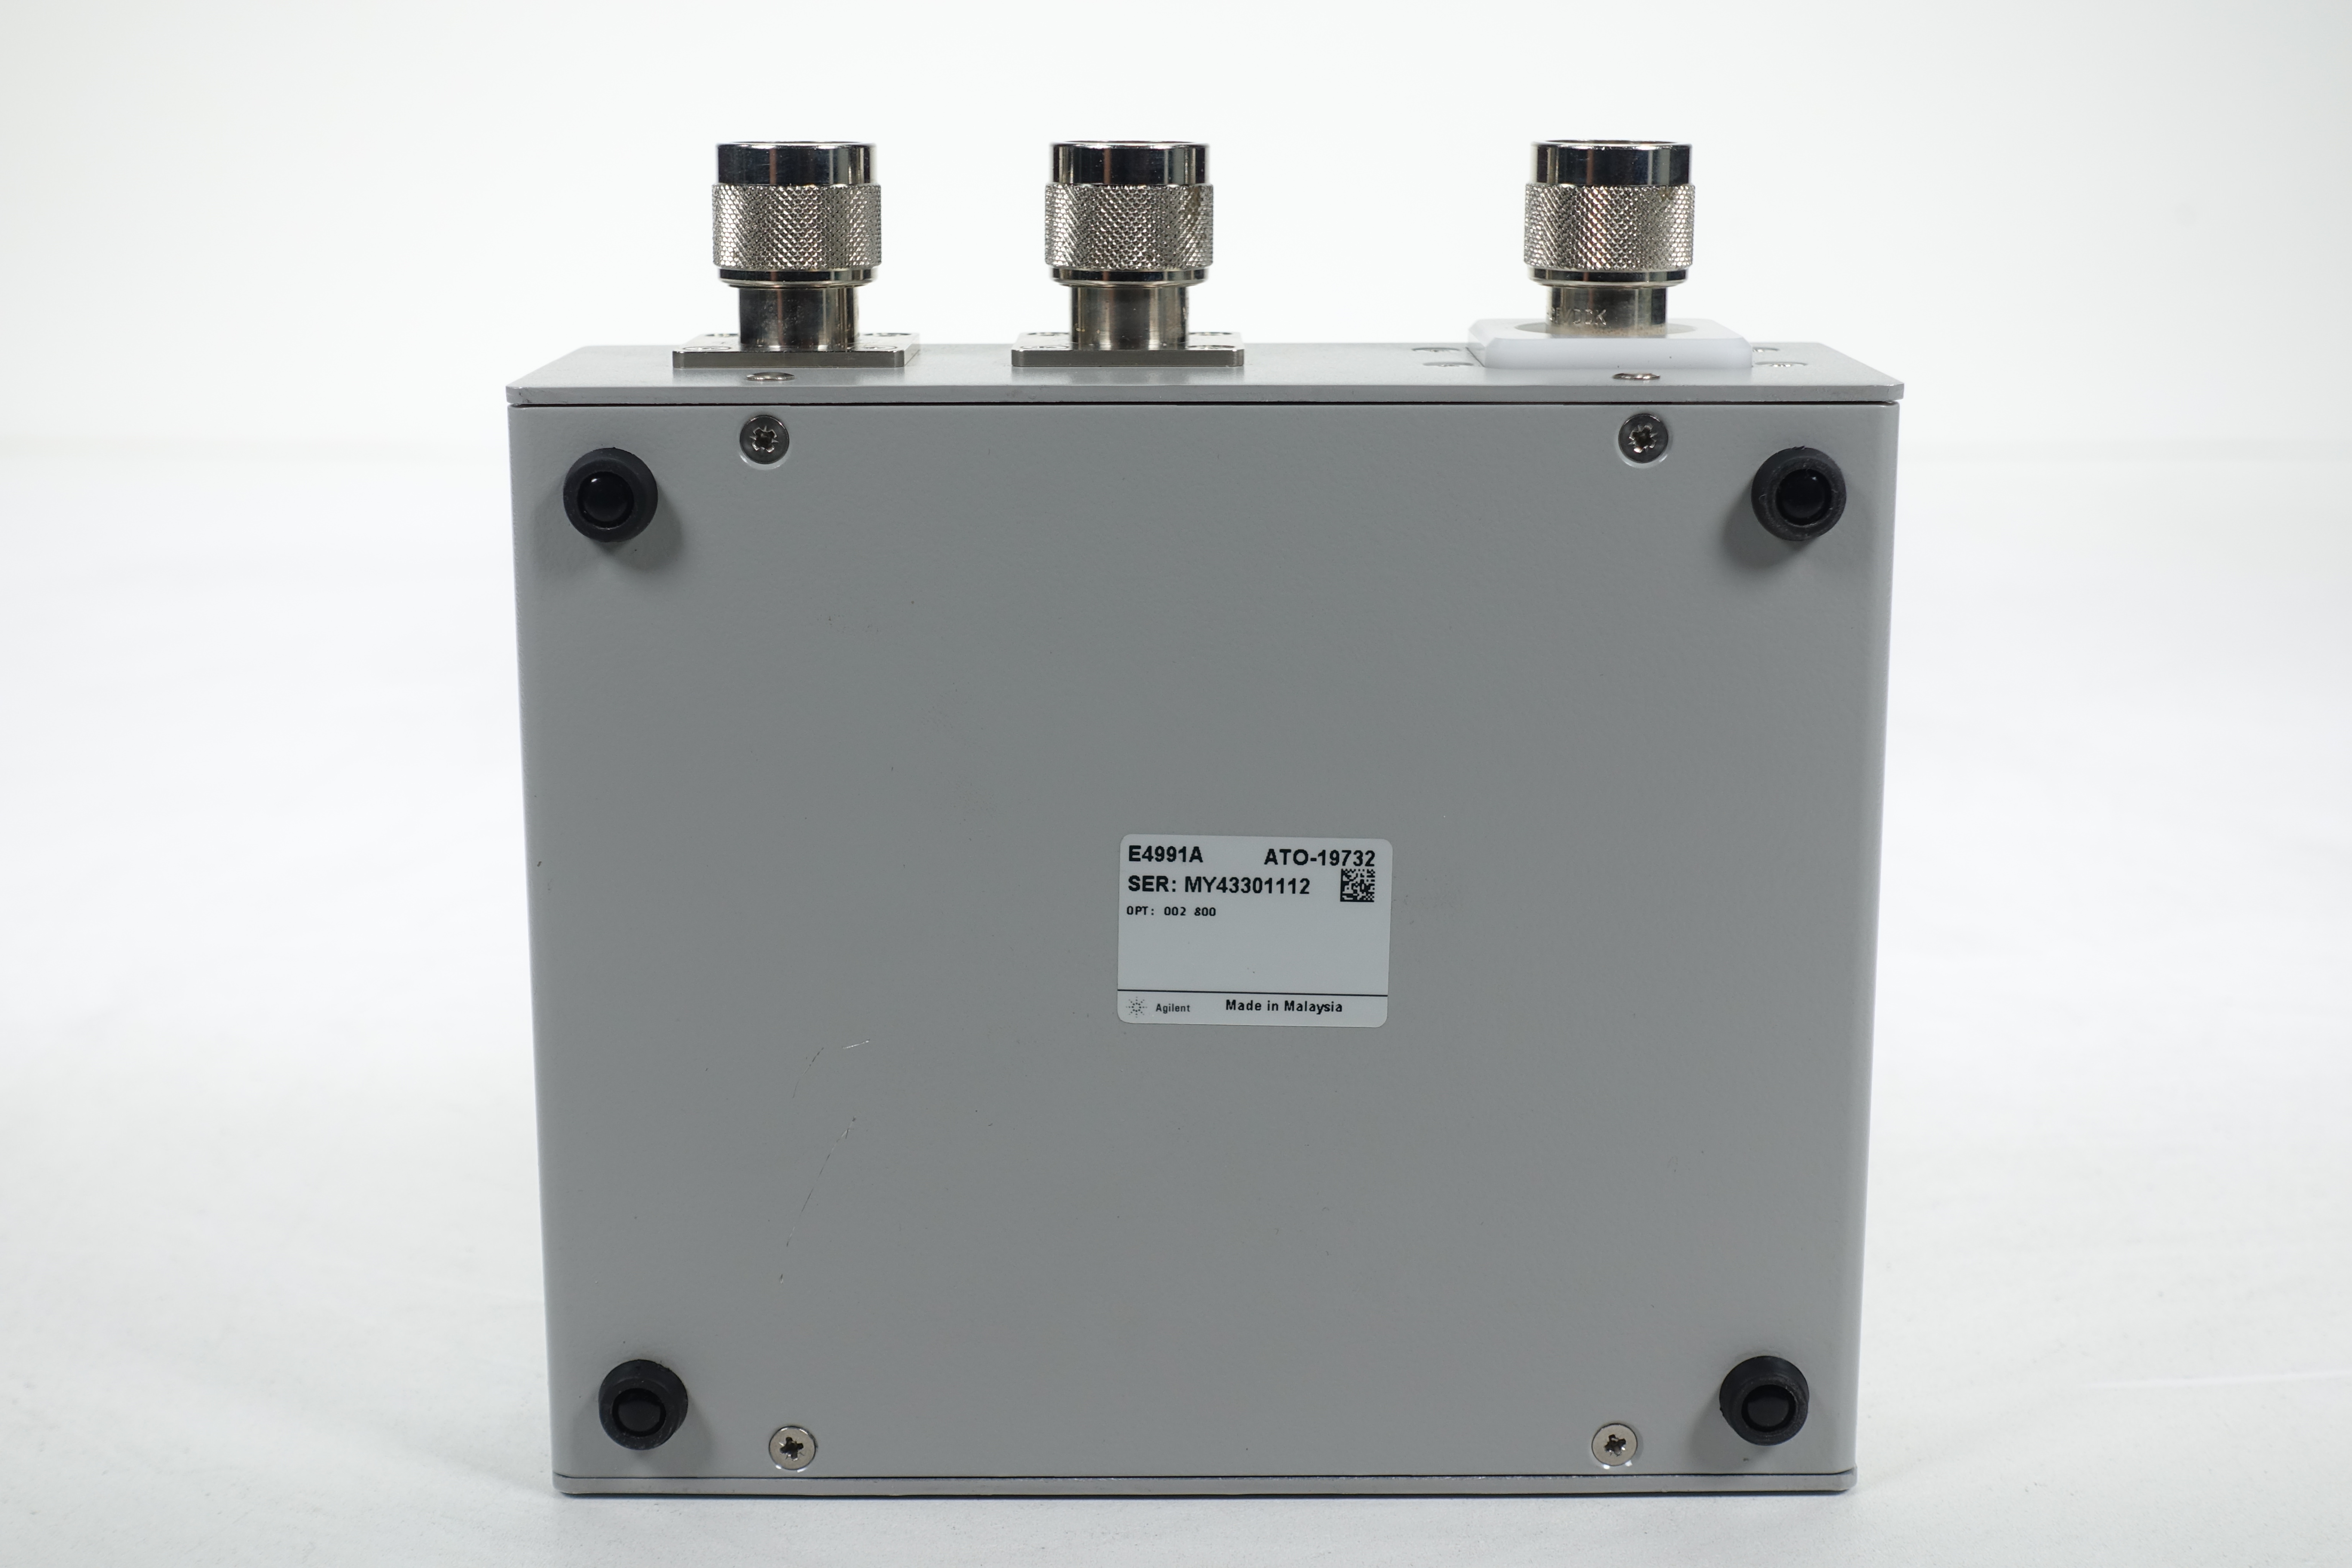 Keysight E4991A RF Impedance/Material Analyzer